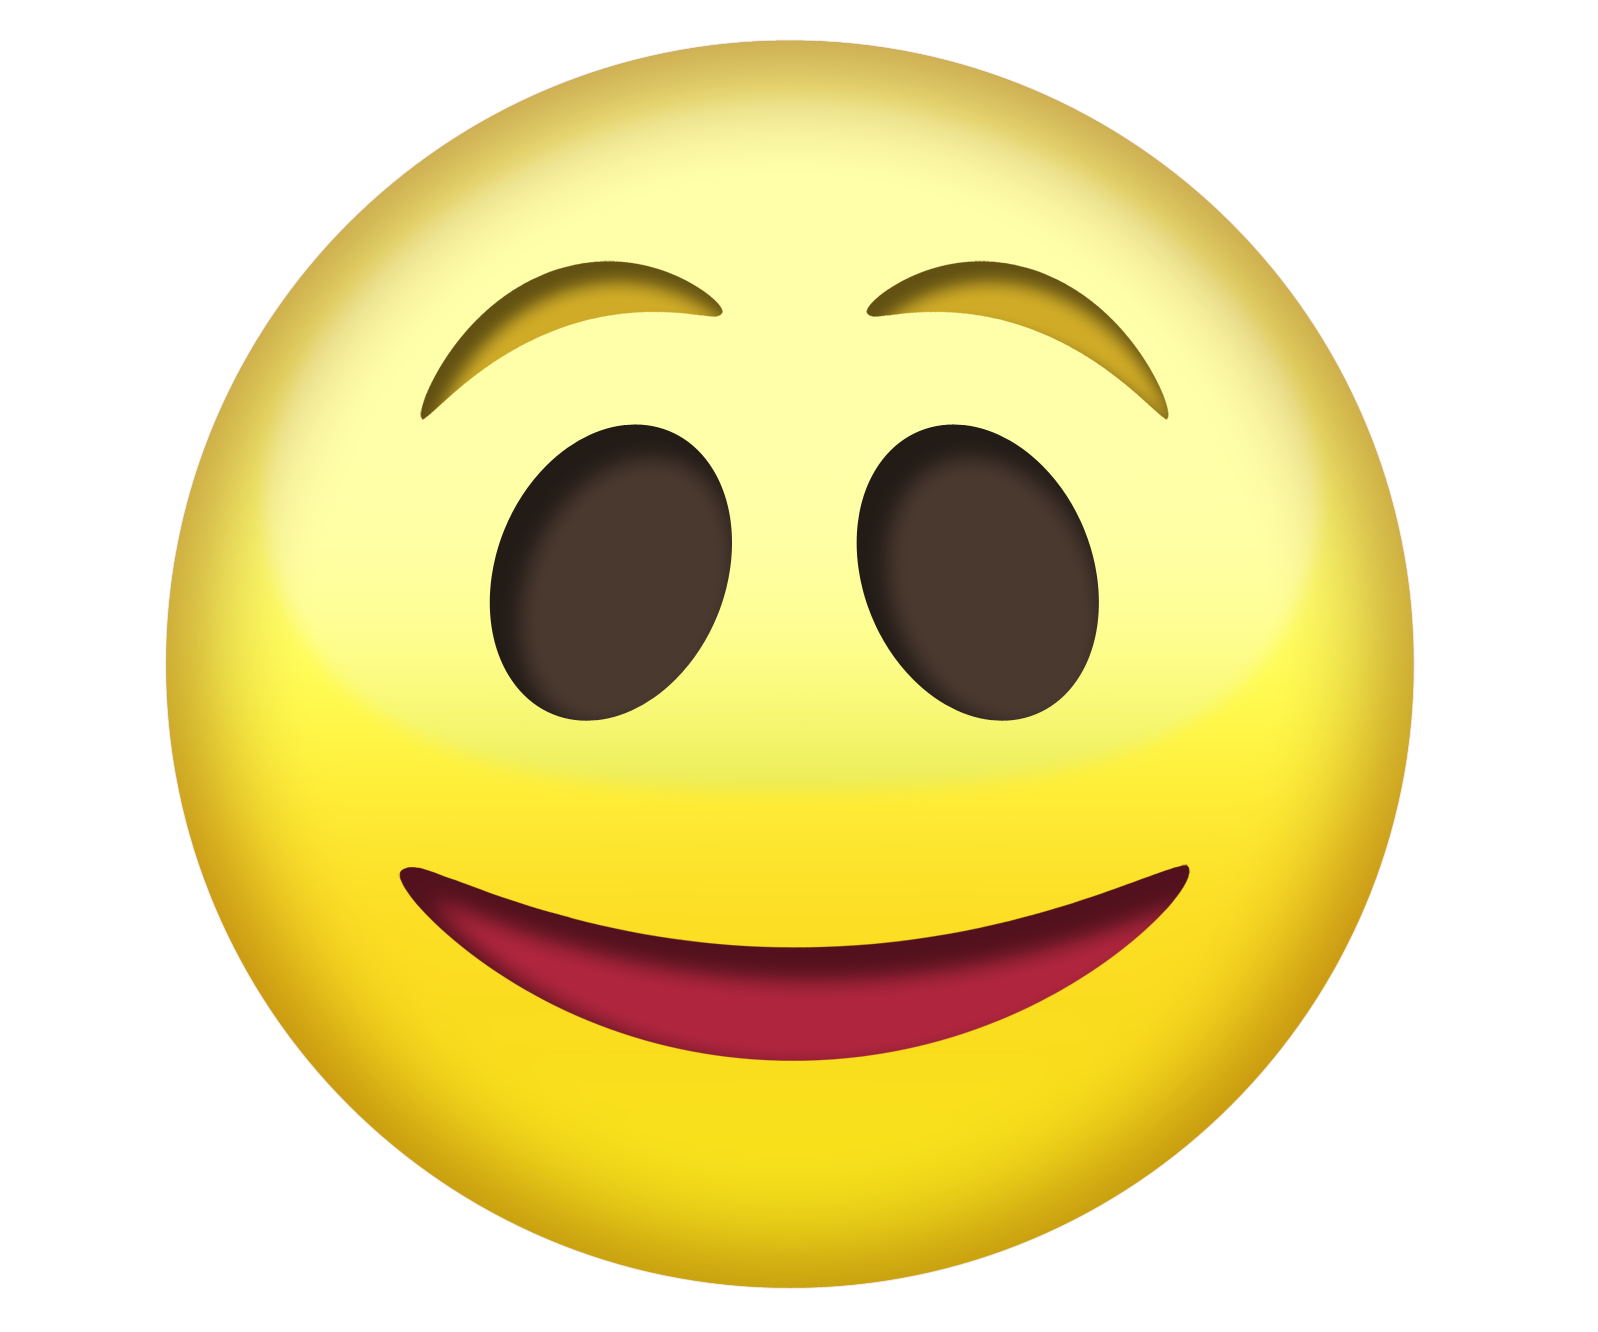 Download PNG image - Emoji Head PNG Free Download 